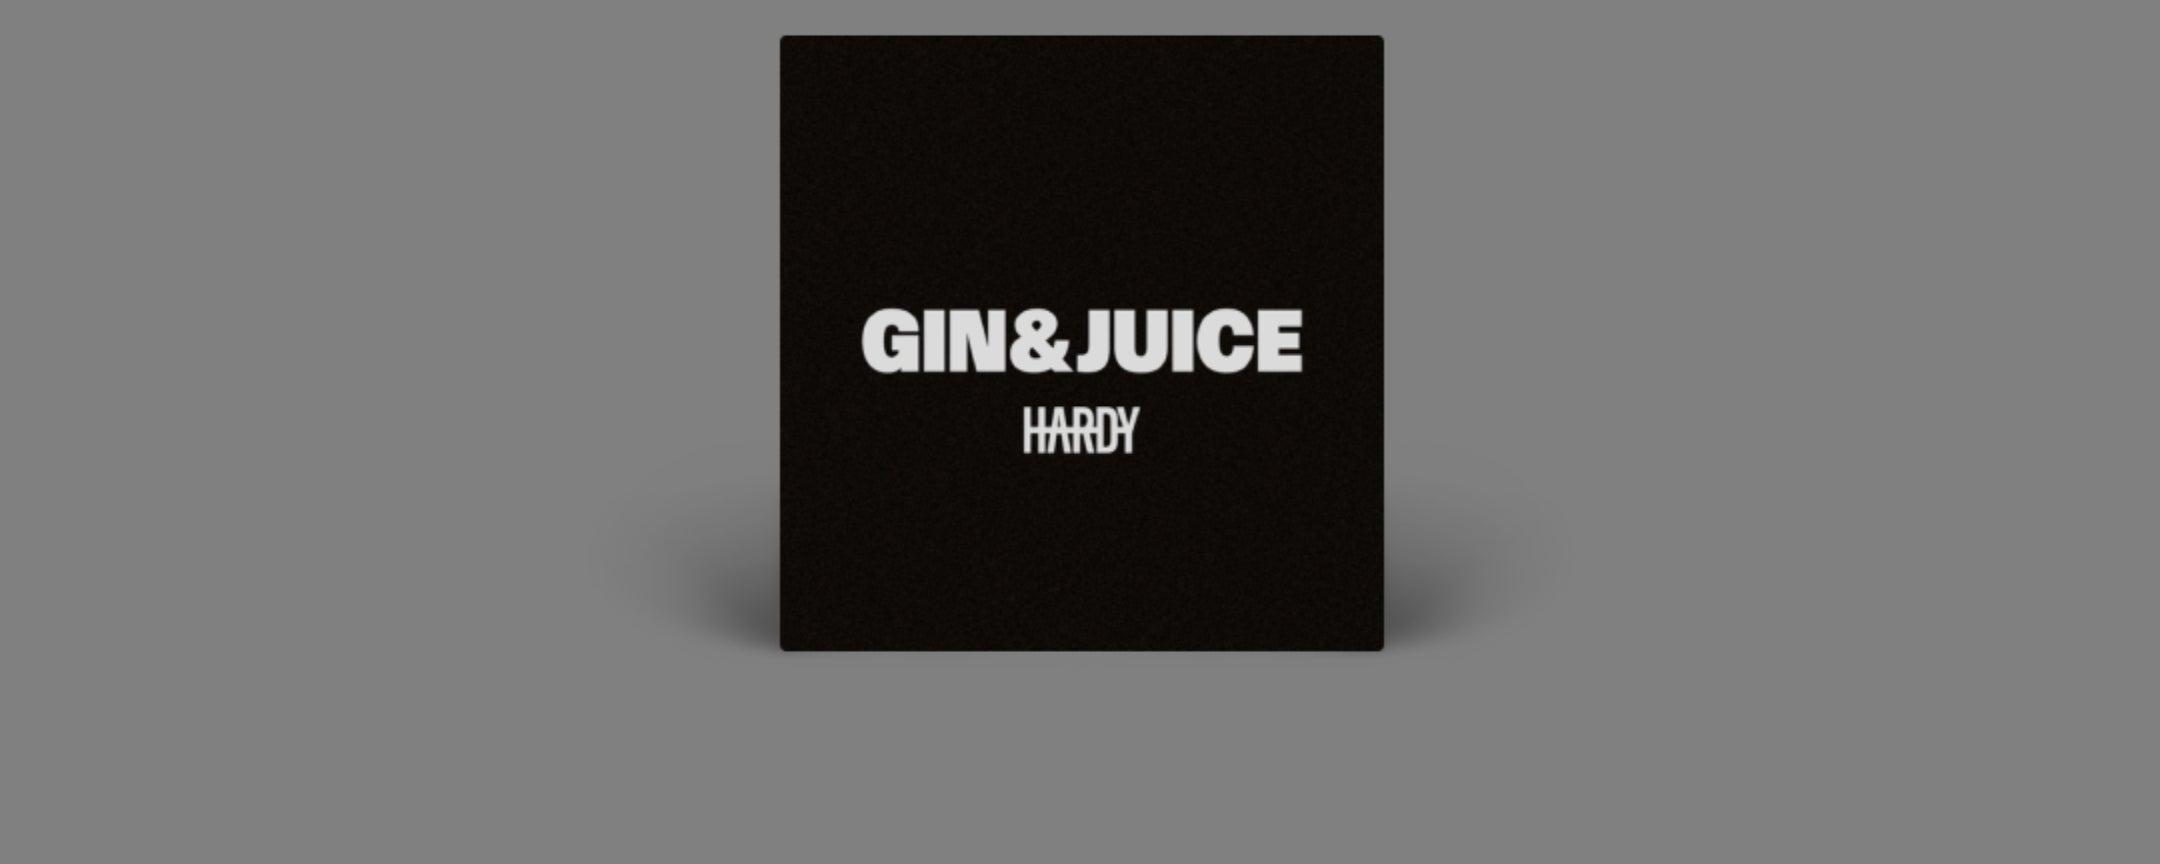 Gin & Juice (HARDY's Version)